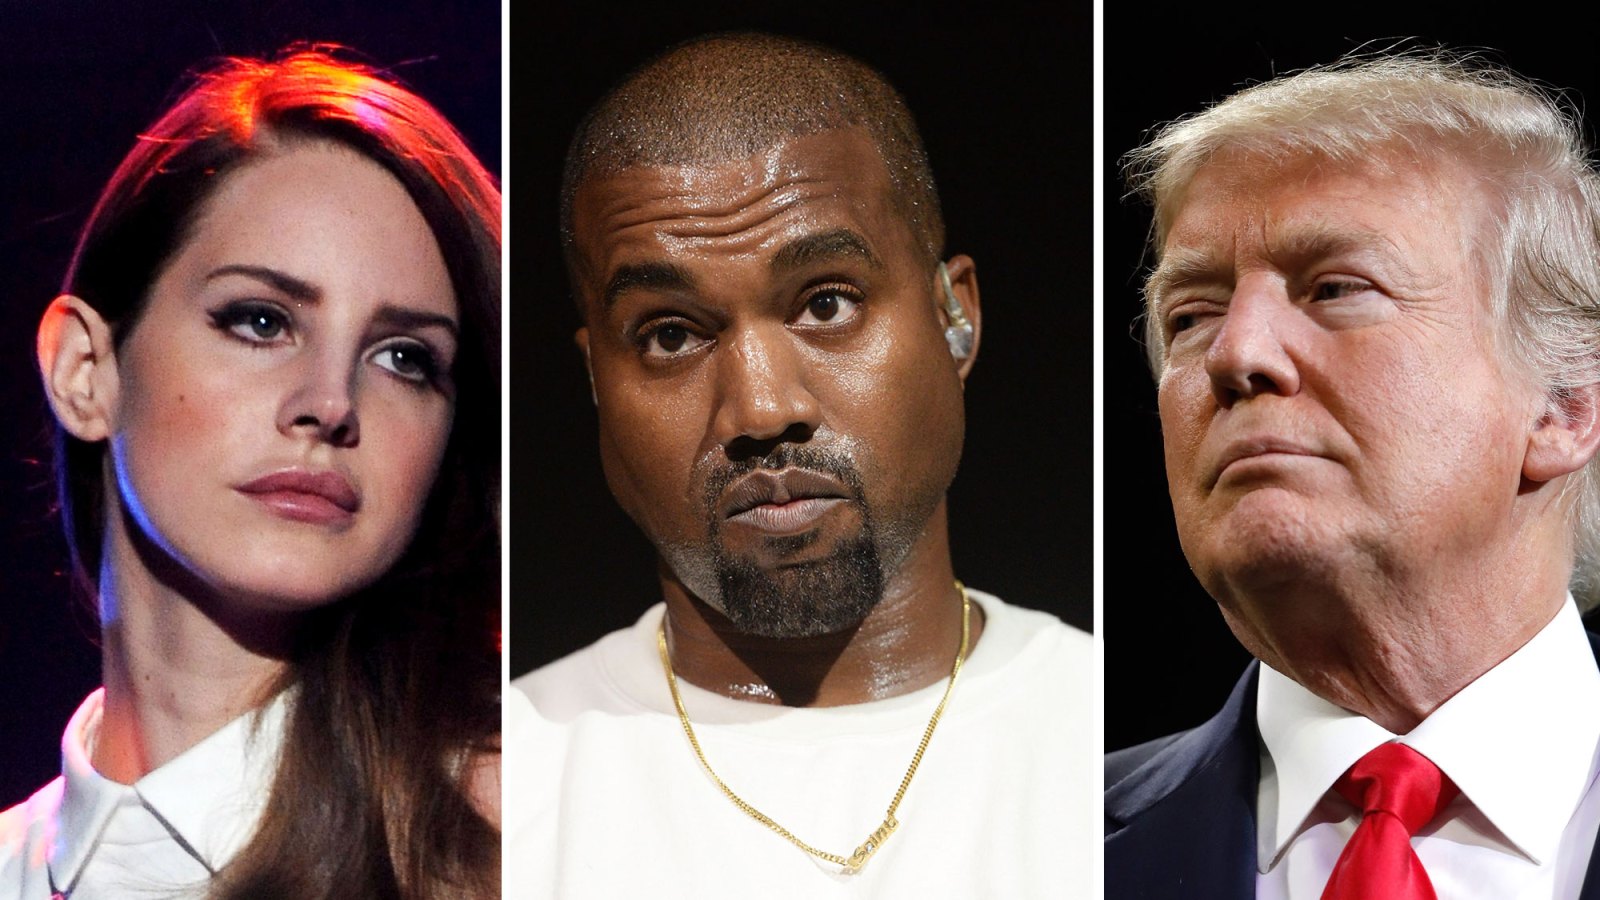 Lana Del Rey, Kanye West and Donald Trump